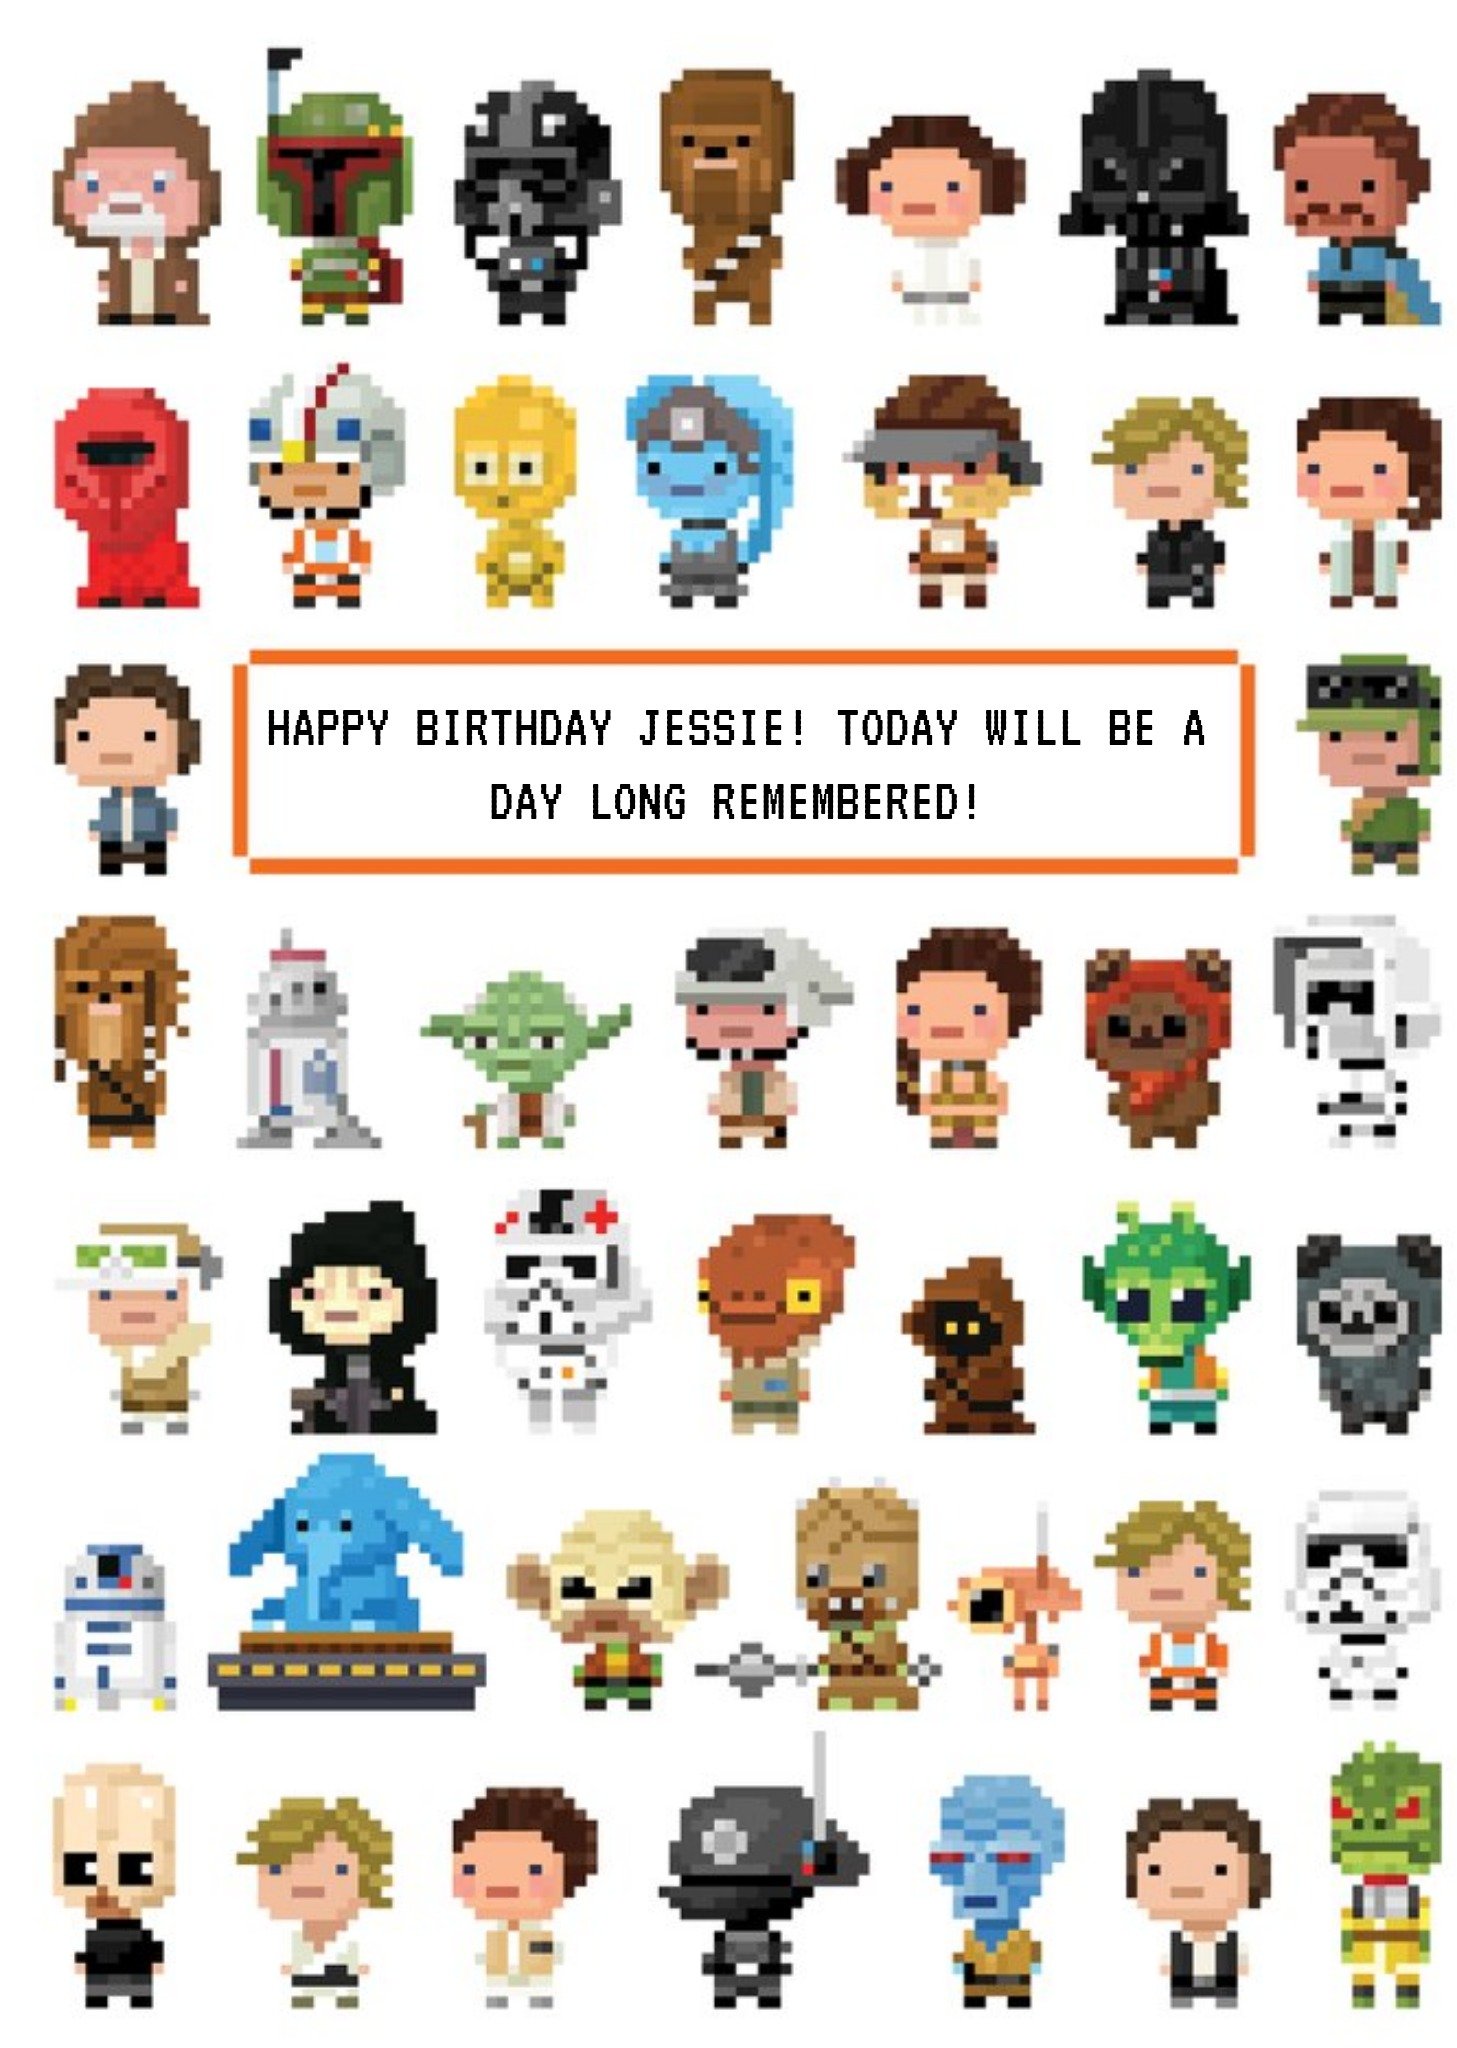 Disney Star Wars Characters 8 Bit Gaming Birthday Card, Large